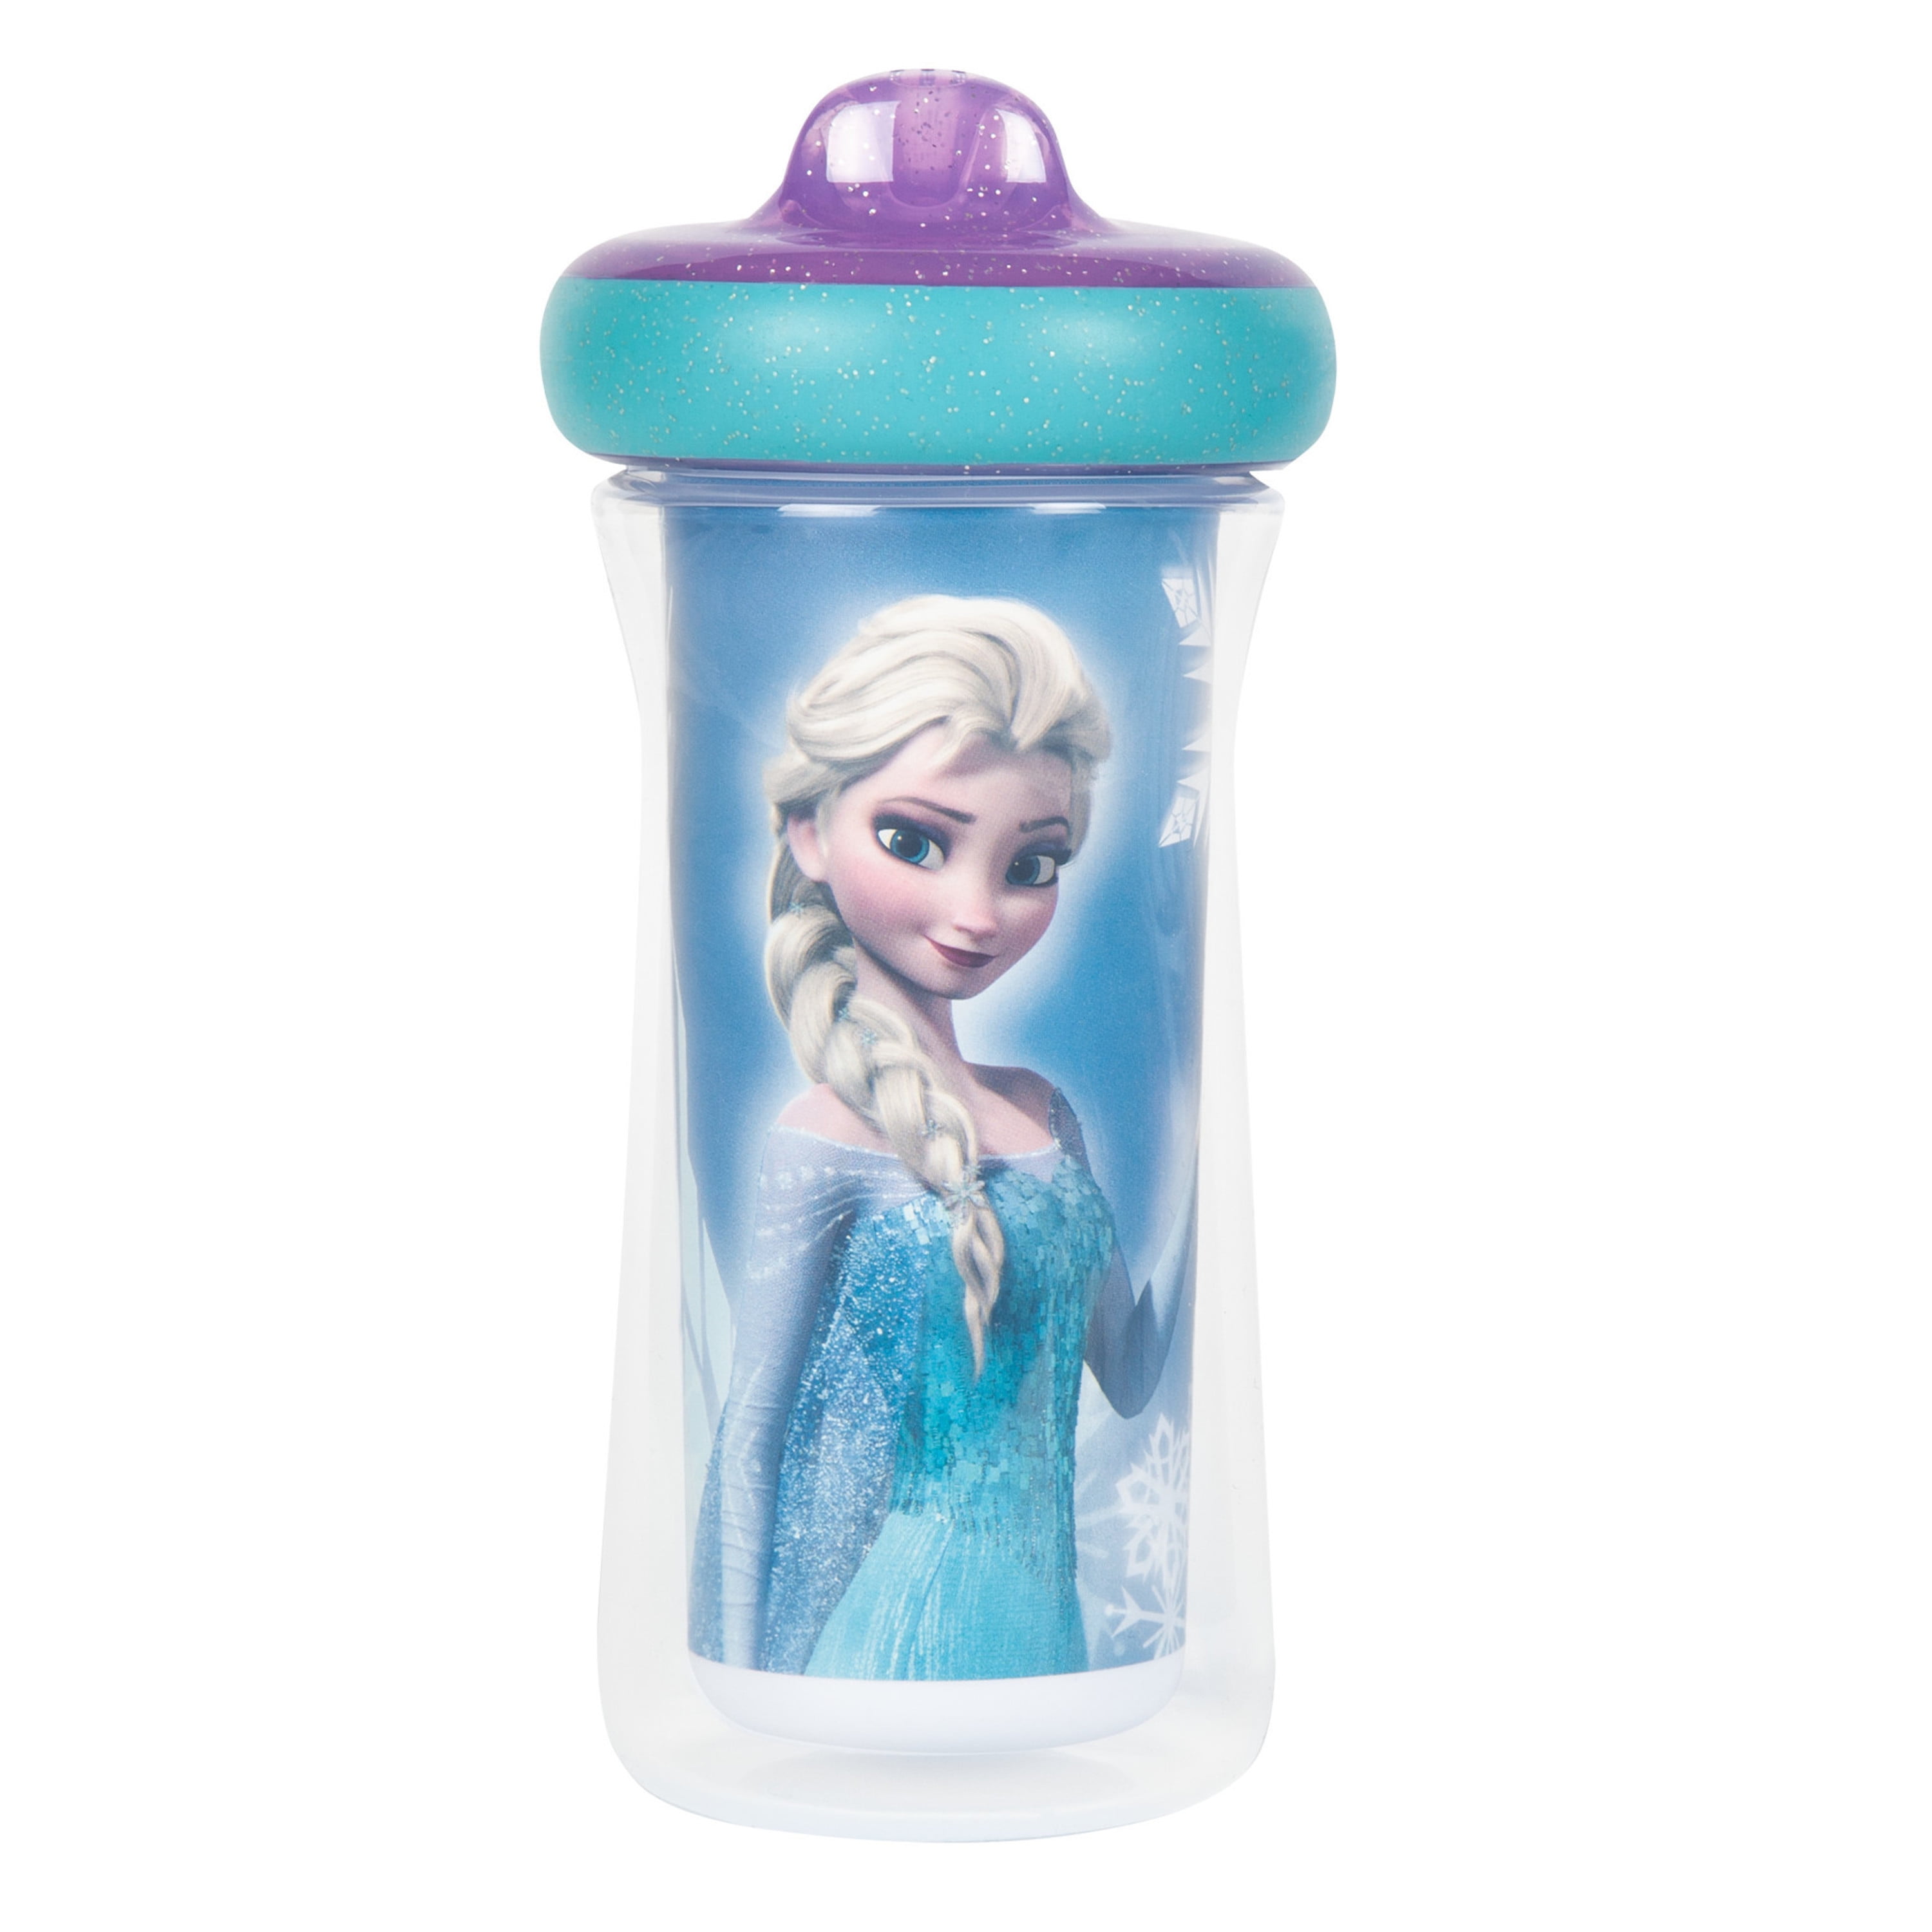 Disney Frozen Insulated Sippy Cups 9oz BPA Free Leak Proof Drop